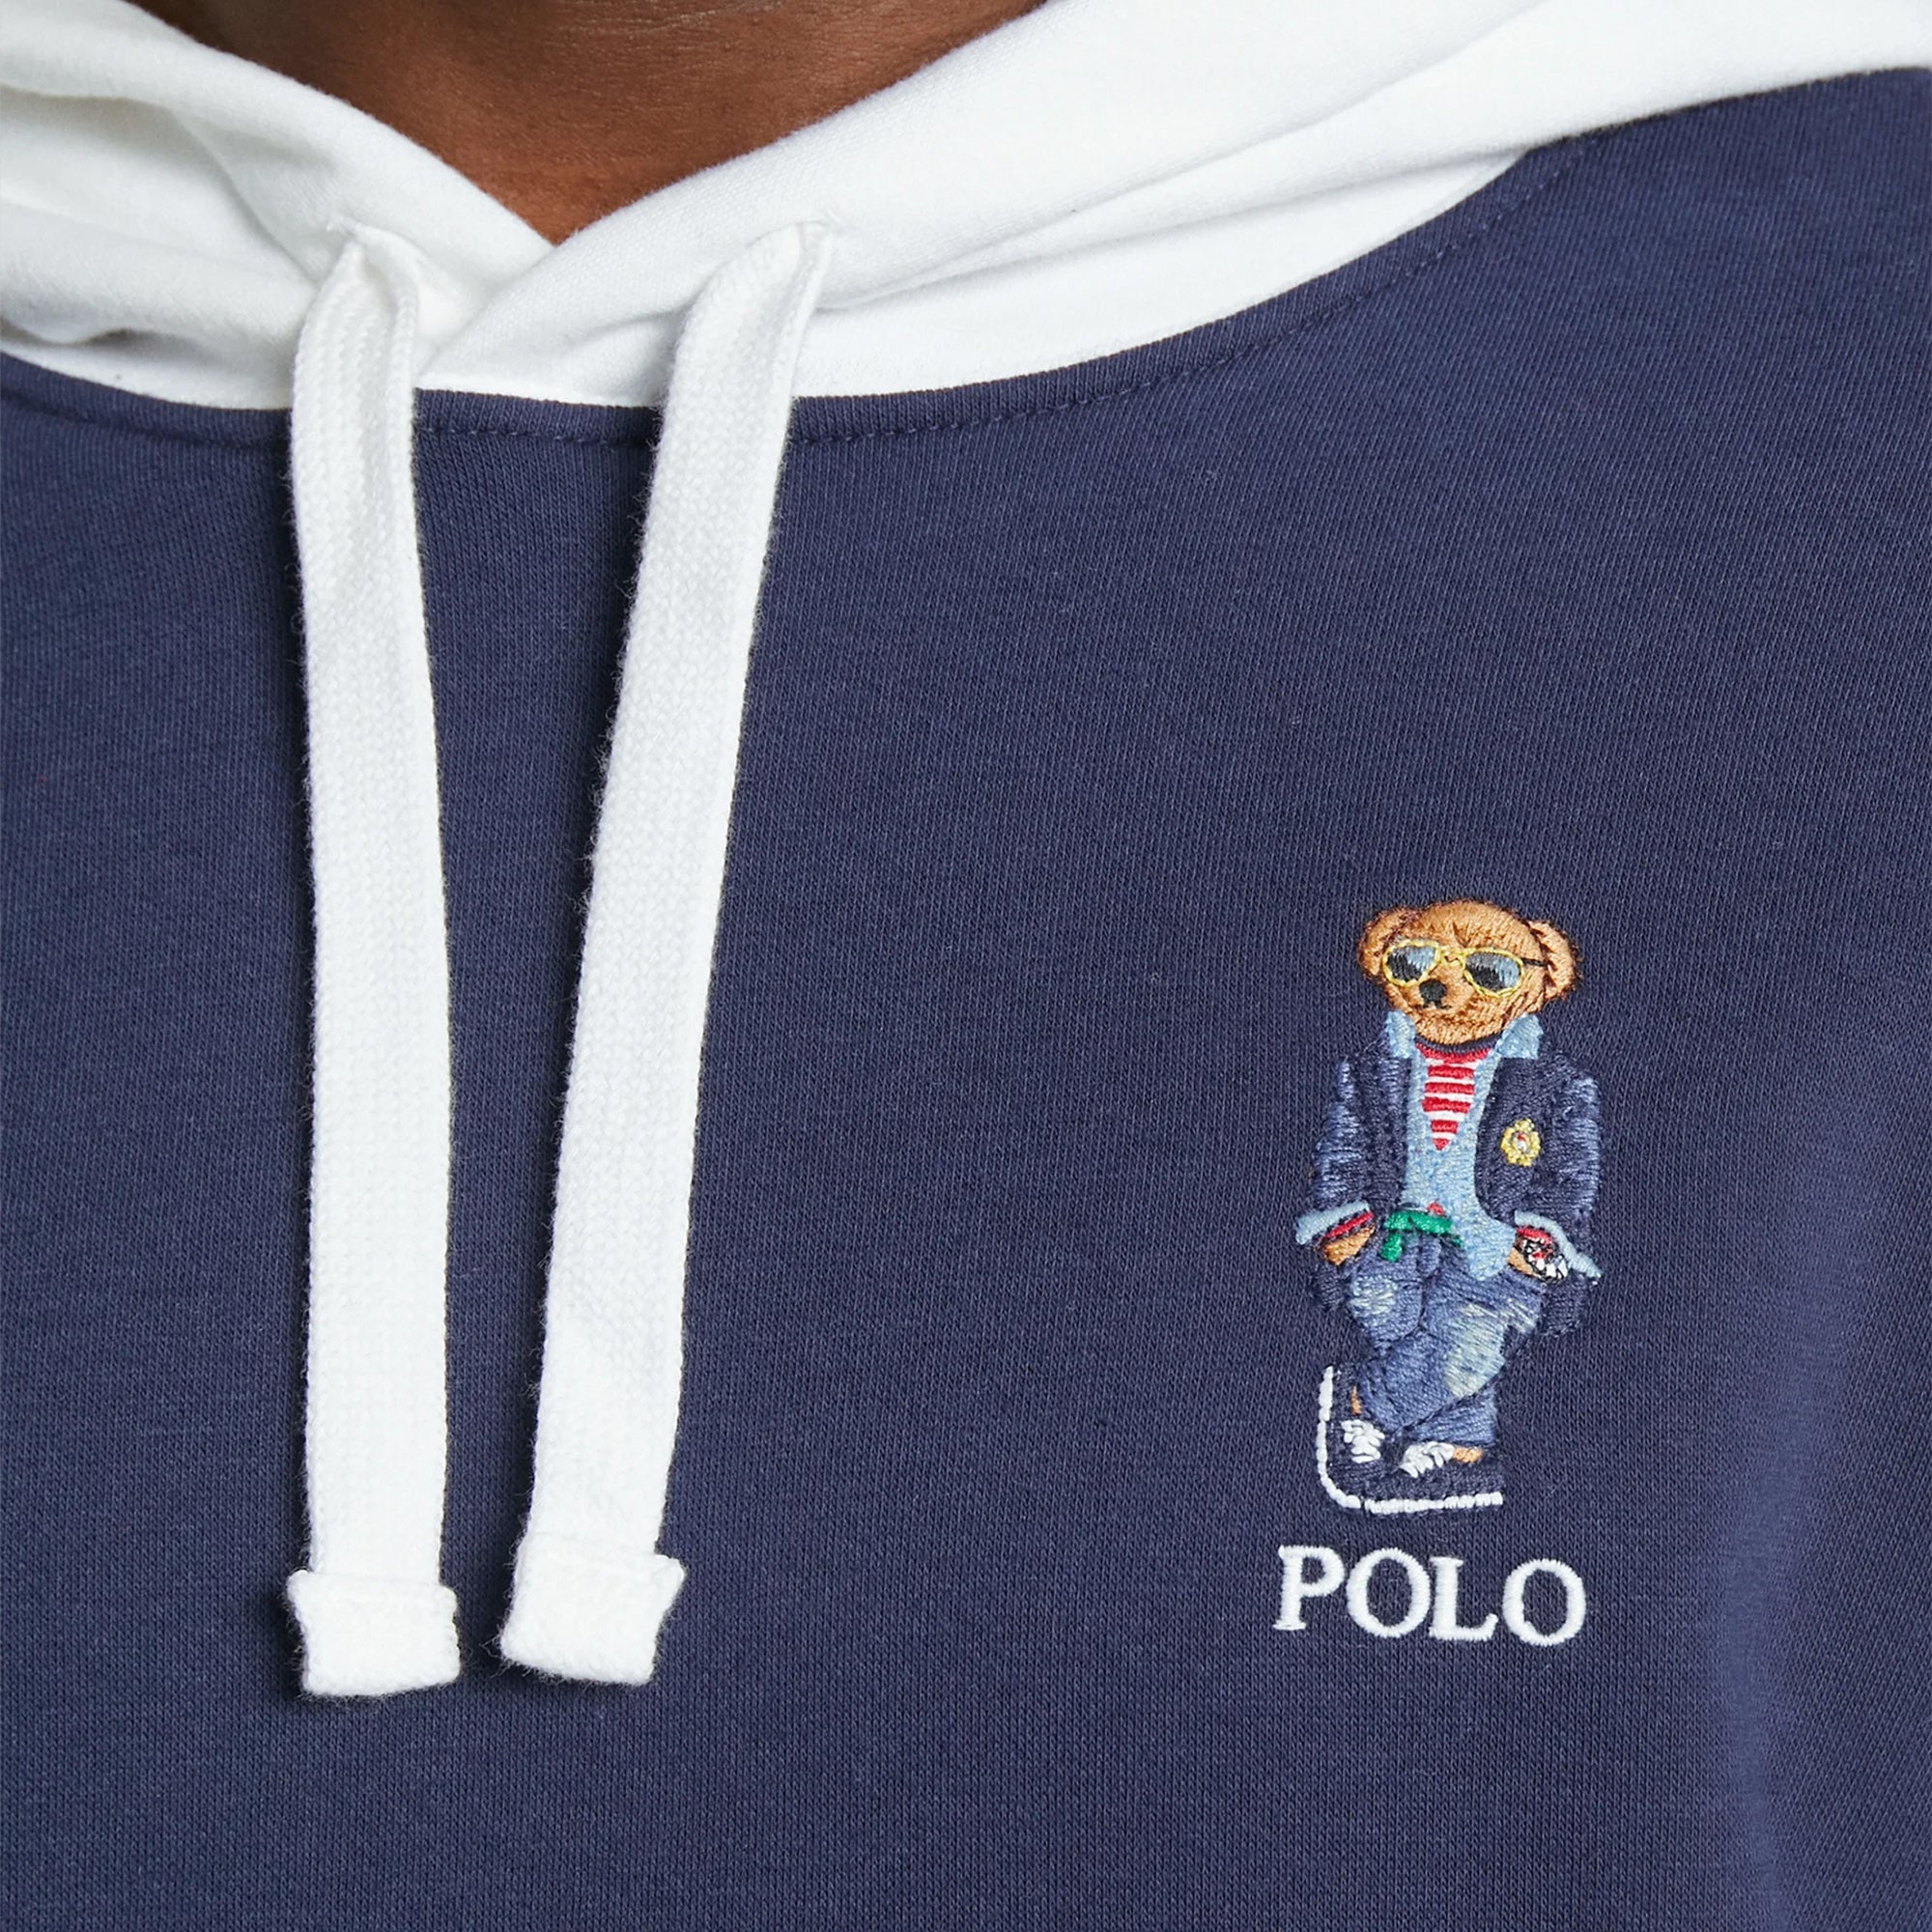 Polo by Ralph Lauren, Shirts, Ralph Lauren Polo Bear Colorblocked Hoodie